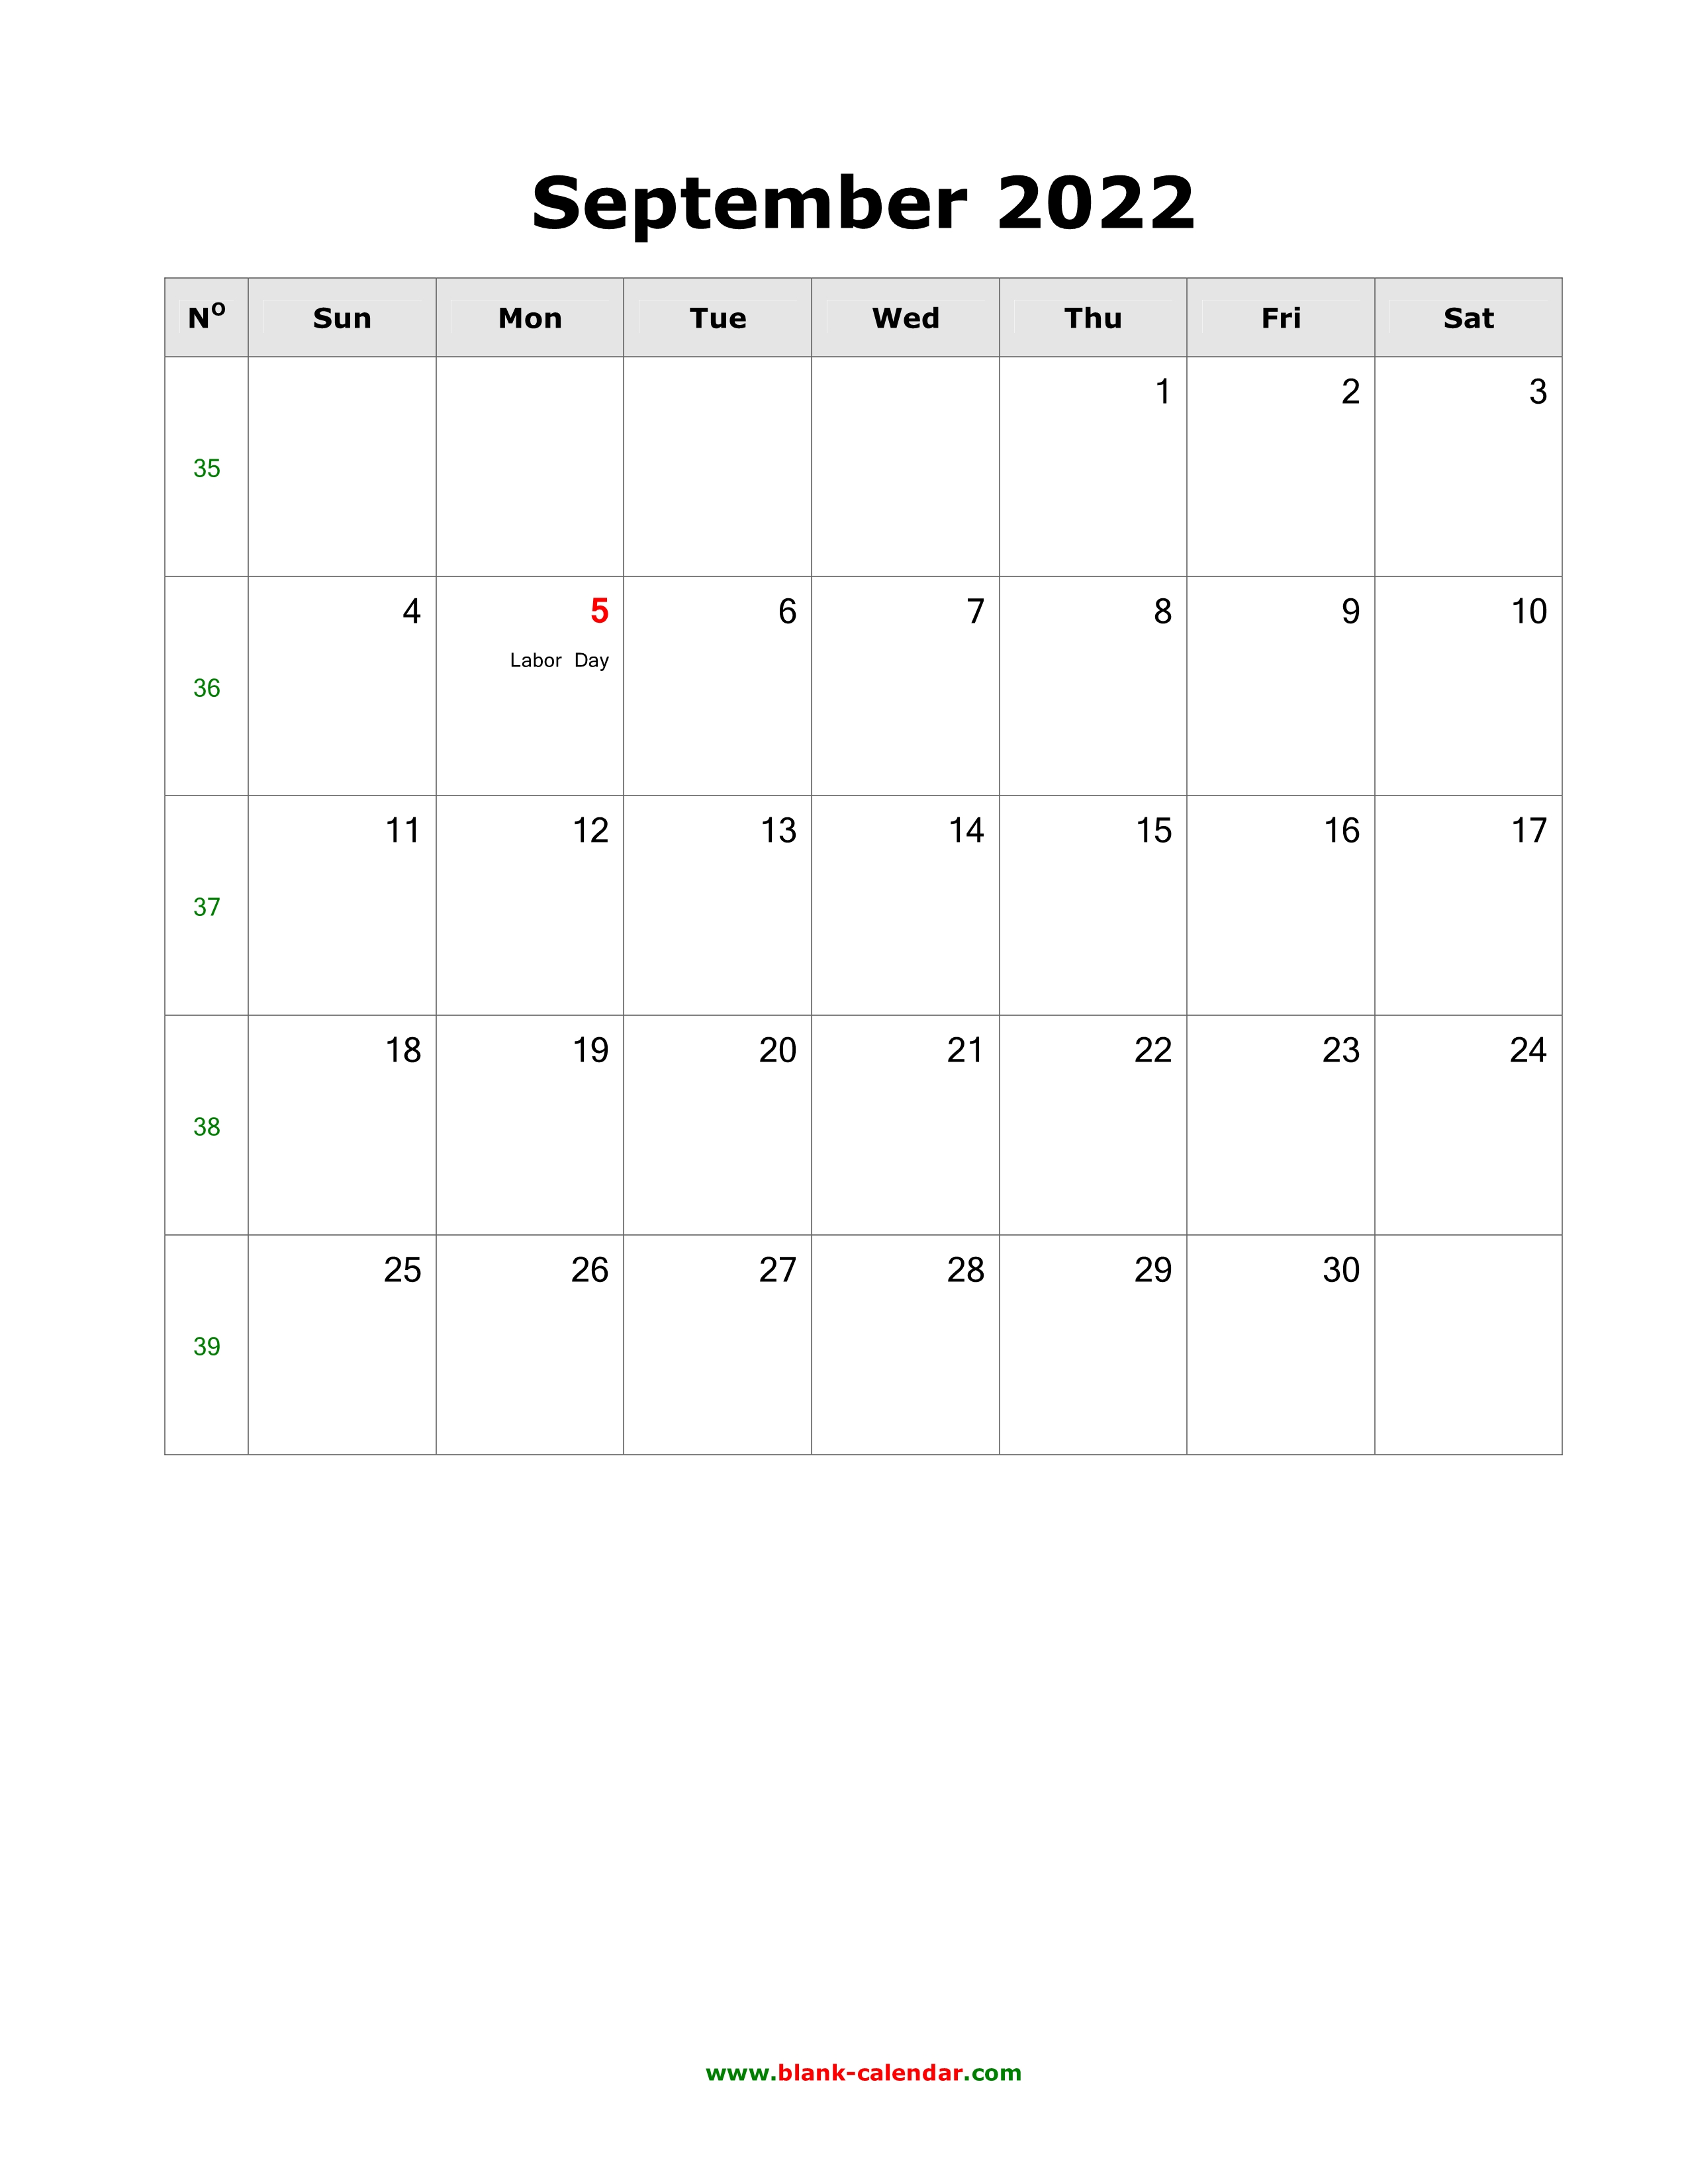 September 2022 Calendar Holidays Download September 2022 Blank Calendar With Us Holidays (Vertical)